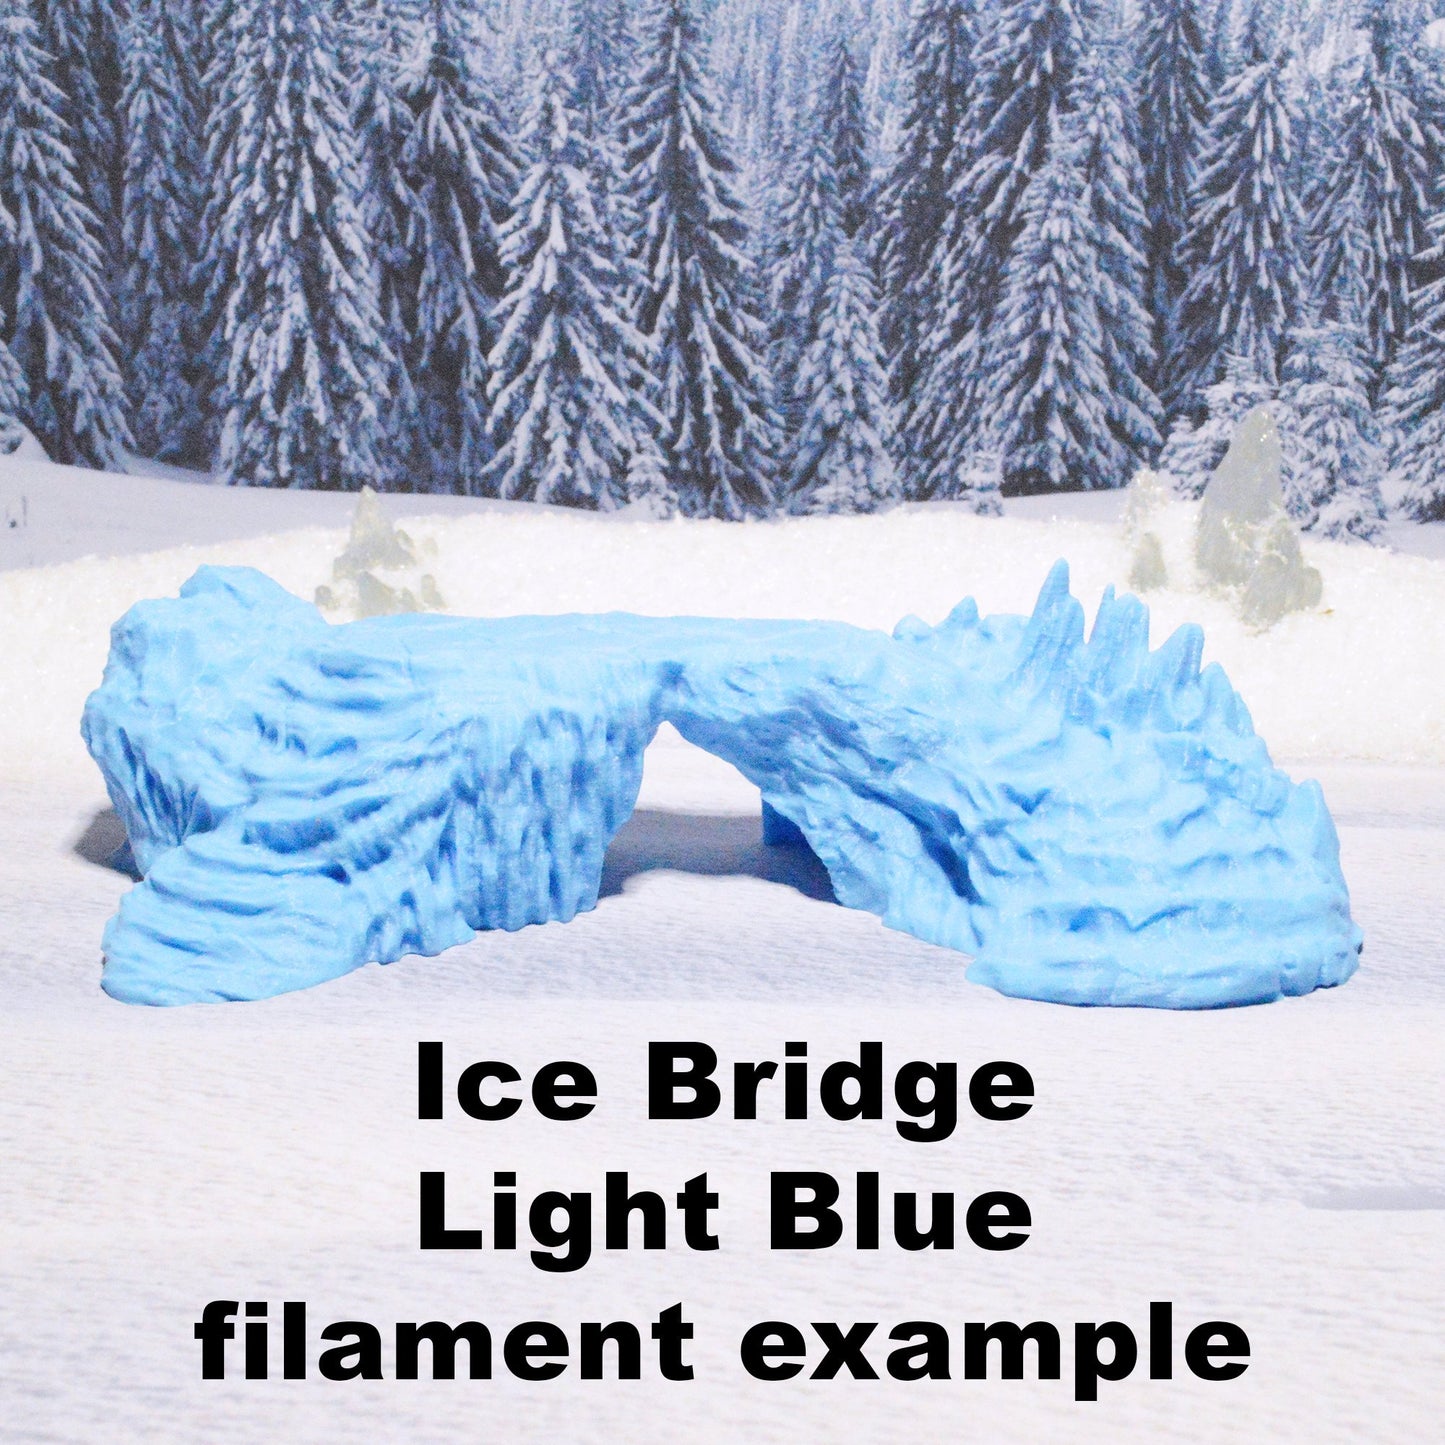 Frozen Bridge 15mm 28mm 32mm for D&D Icewind Dale Terrain, DnD Pathfinder Frostgrave Arctic Snowy Icy